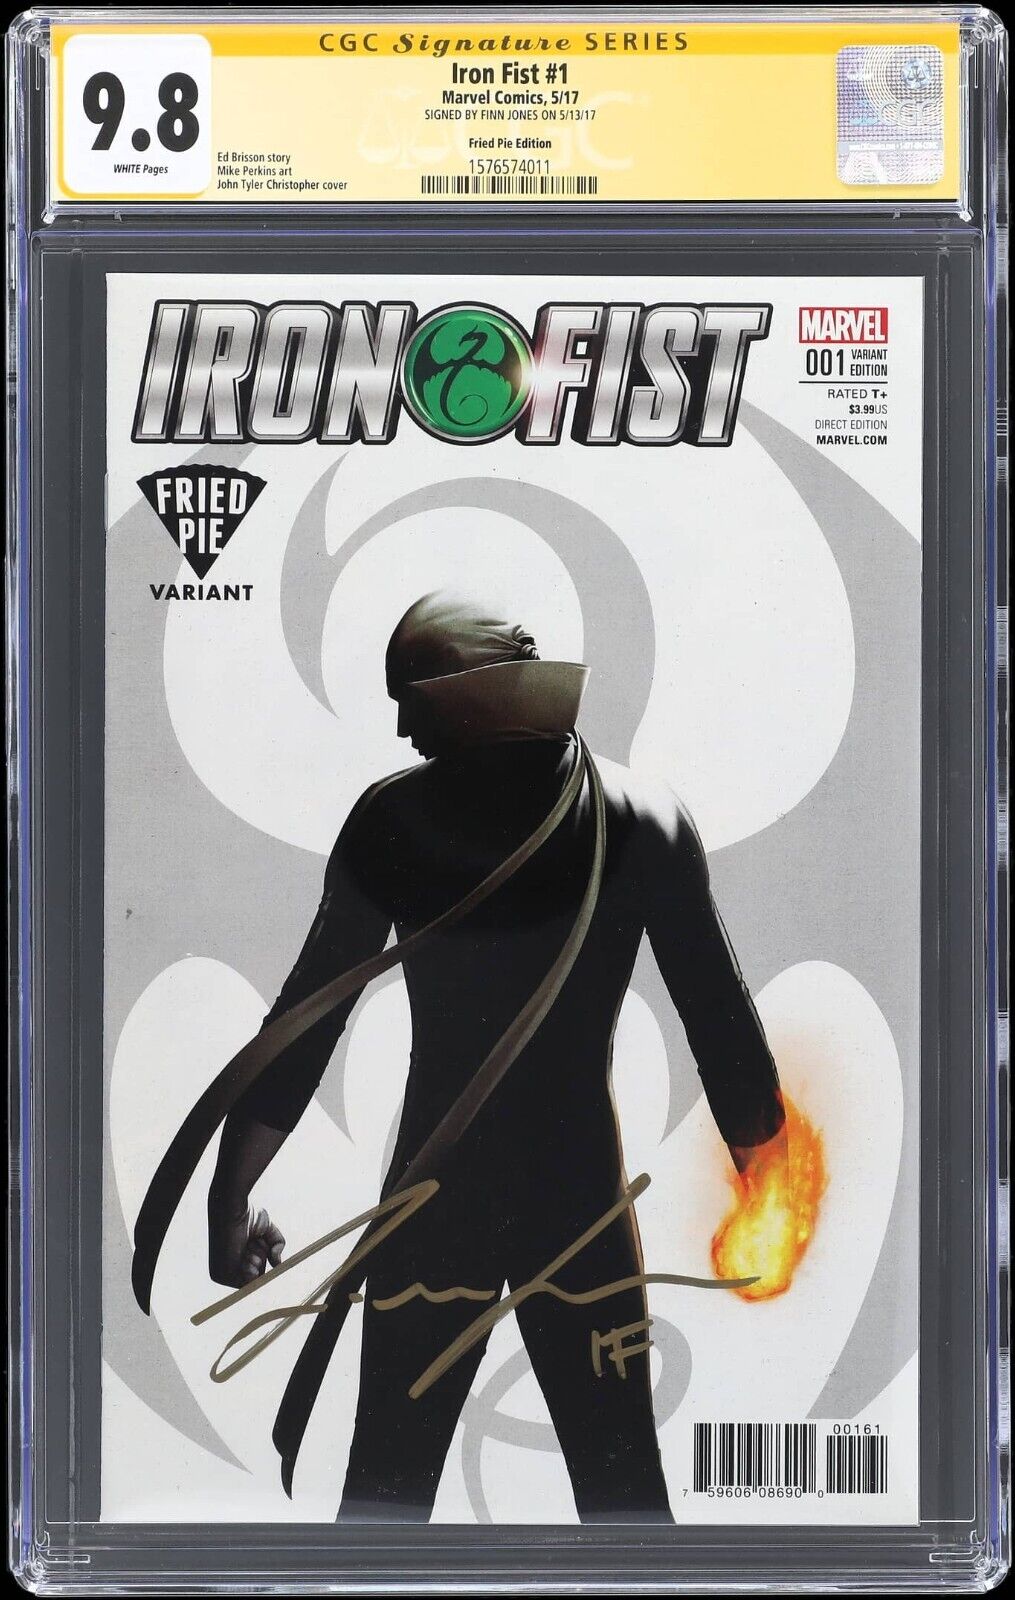 2017 Marvel Iron Fist #1 Variant CGC 9.8 SS Signature Edition signed Finn Jones